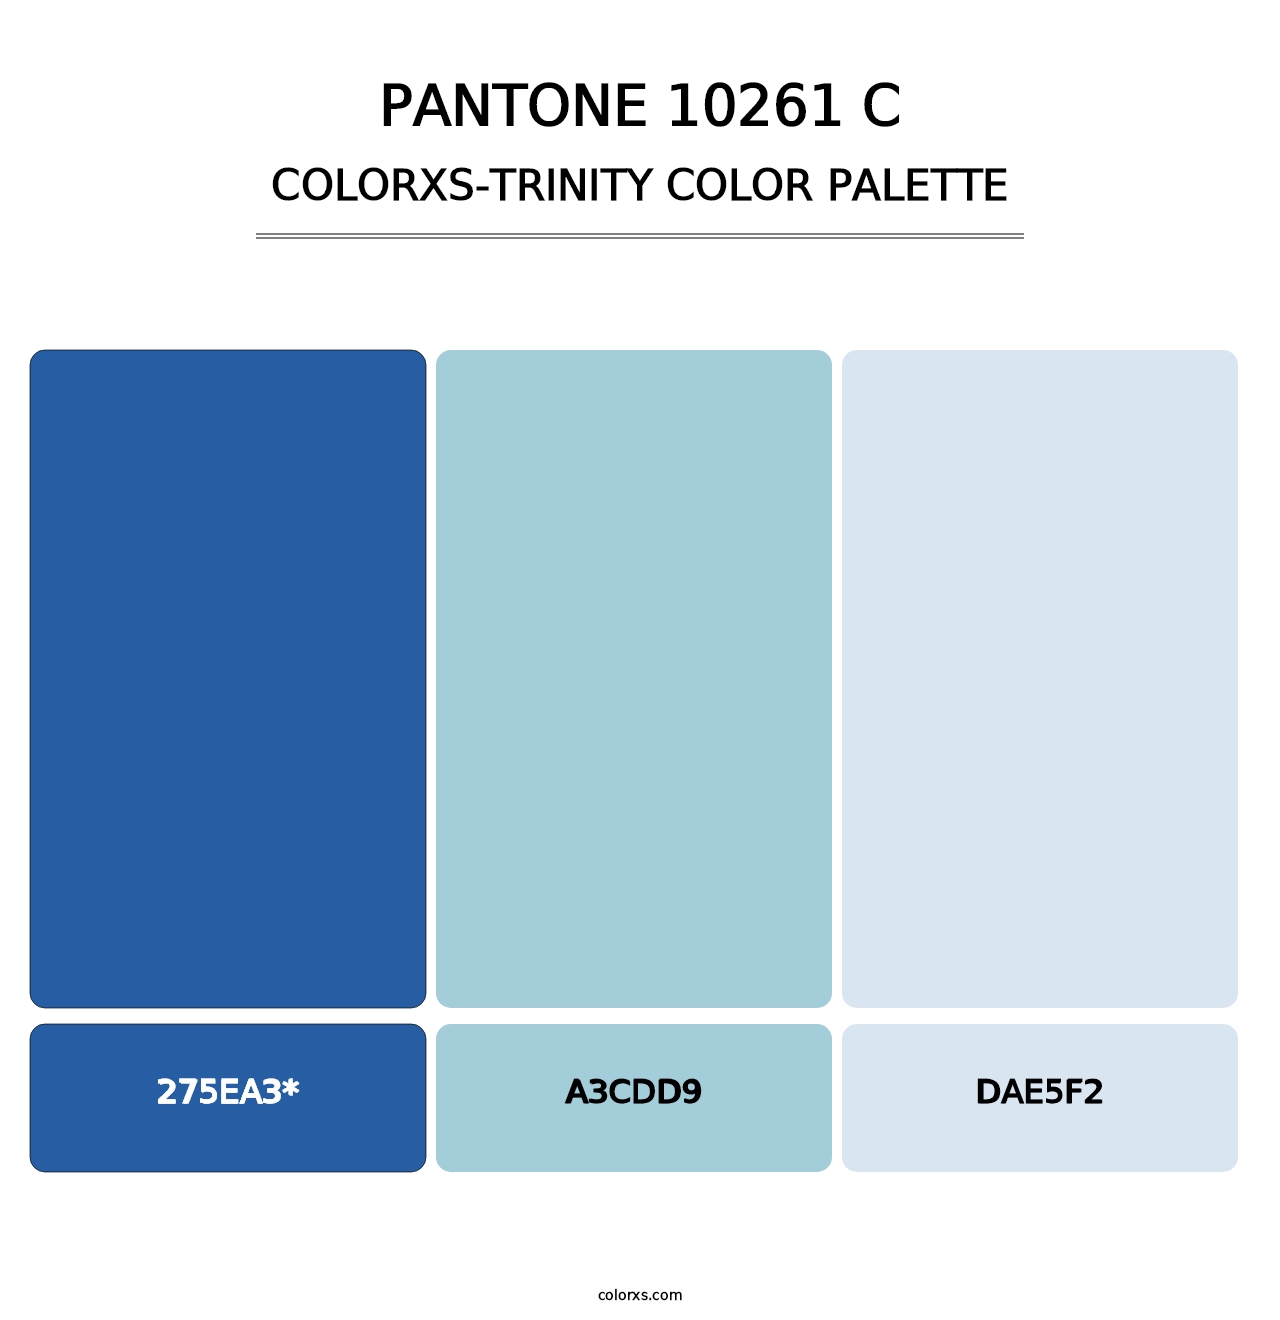 PANTONE 10261 C - Colorxs Trinity Palette